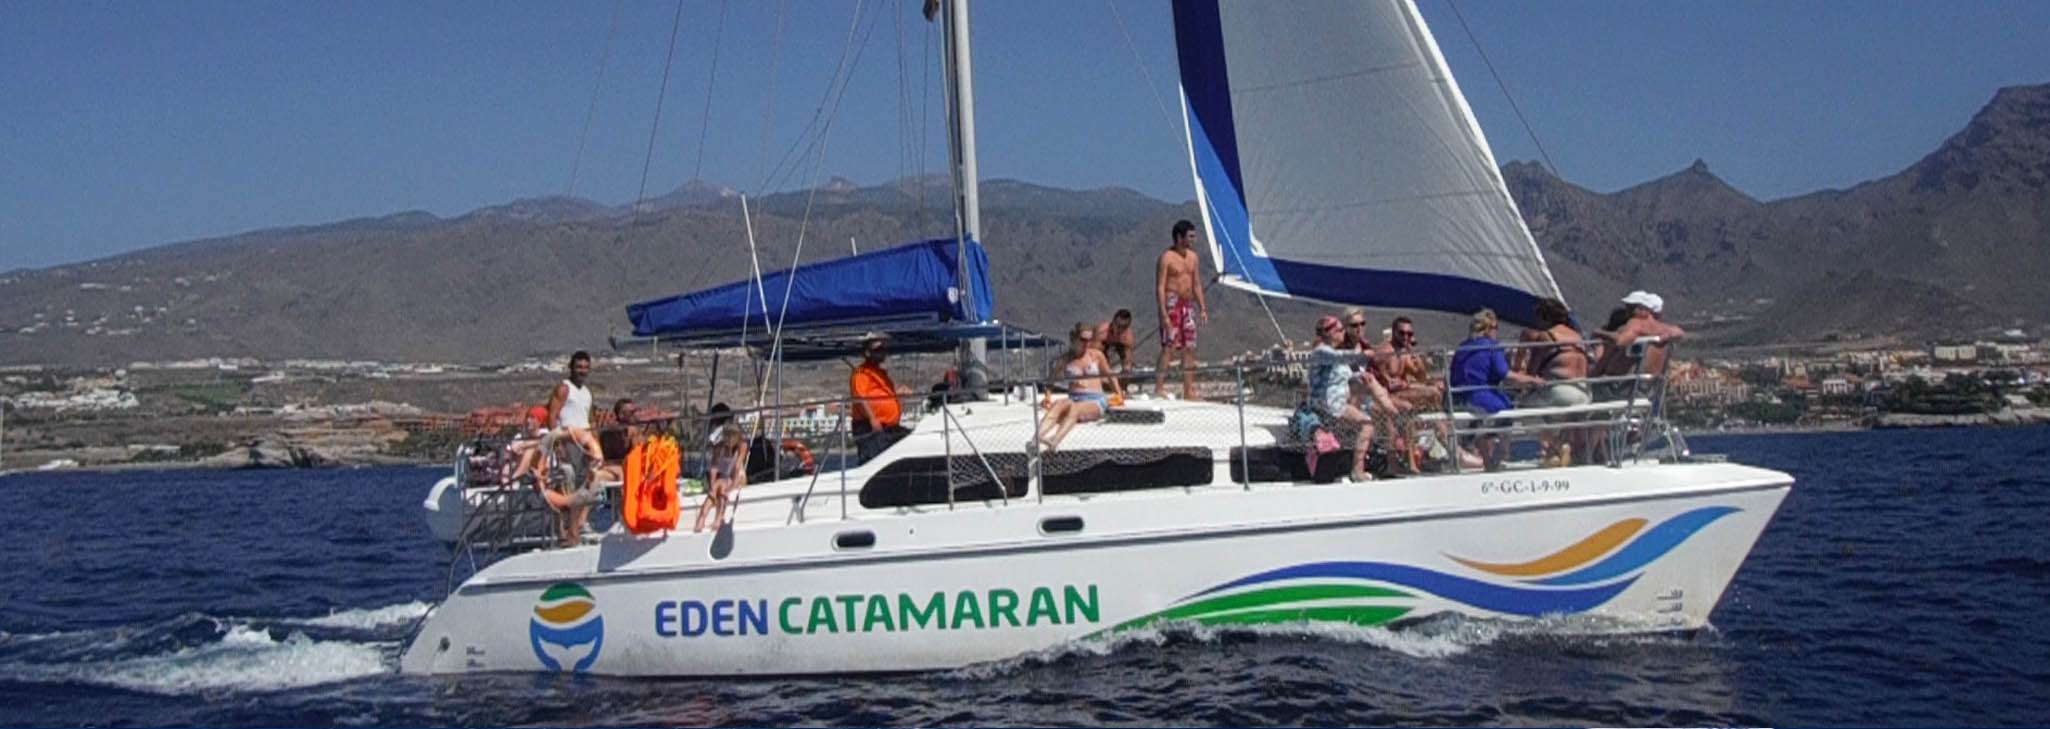 chasing eden catamaran